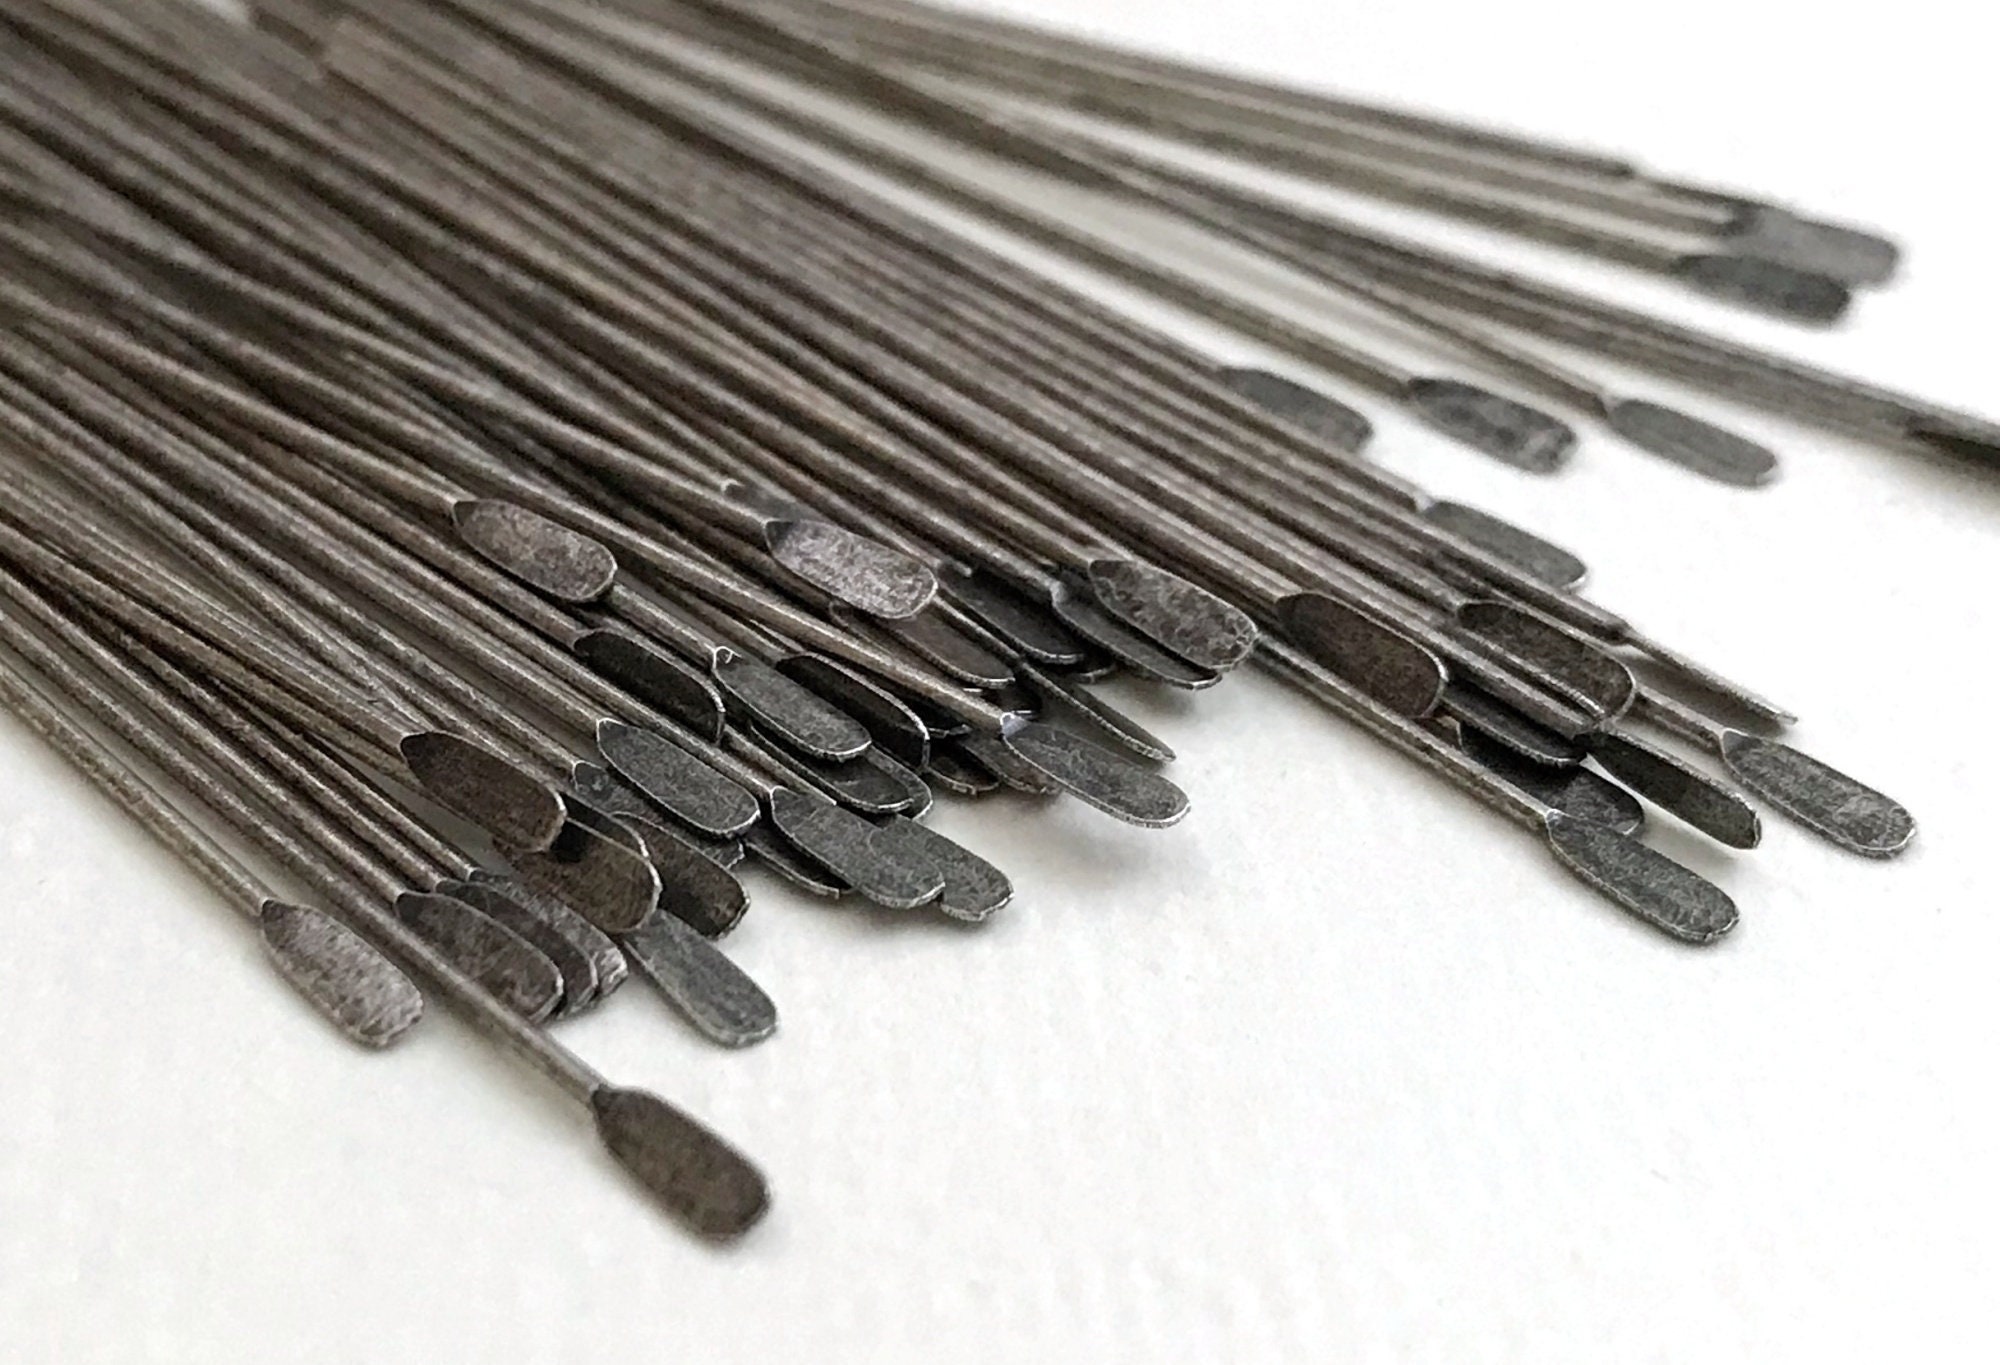 Antique Silver Hammered Pins. Dark Oxidized Silver Black | Etsy